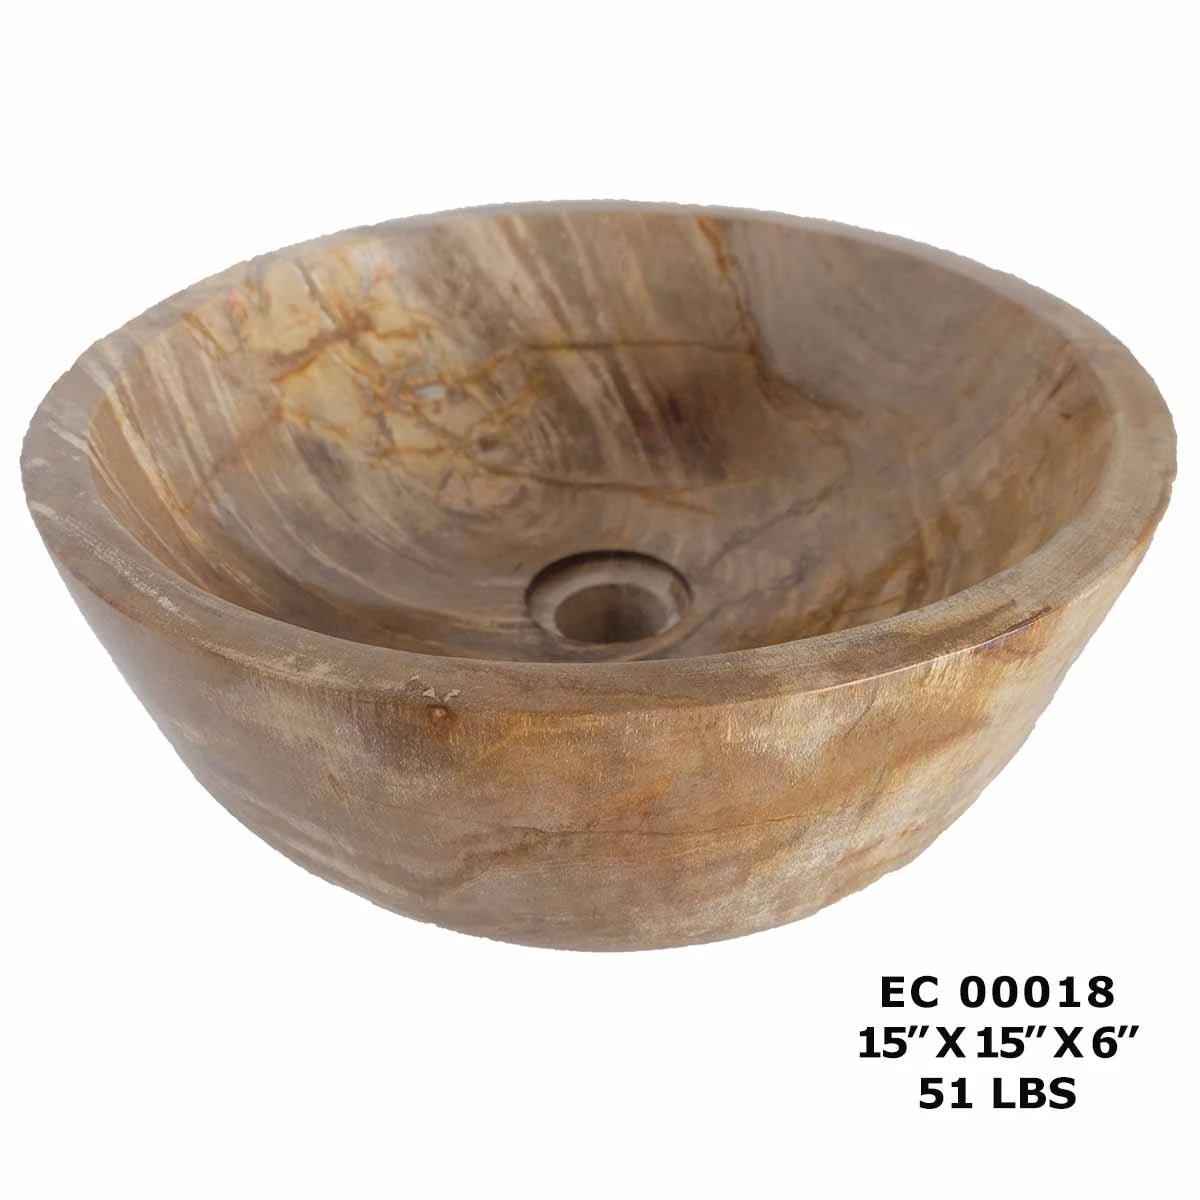 Petrified Wood Single Bowl Sink, Natural Stone Bathroom Sink EC00018